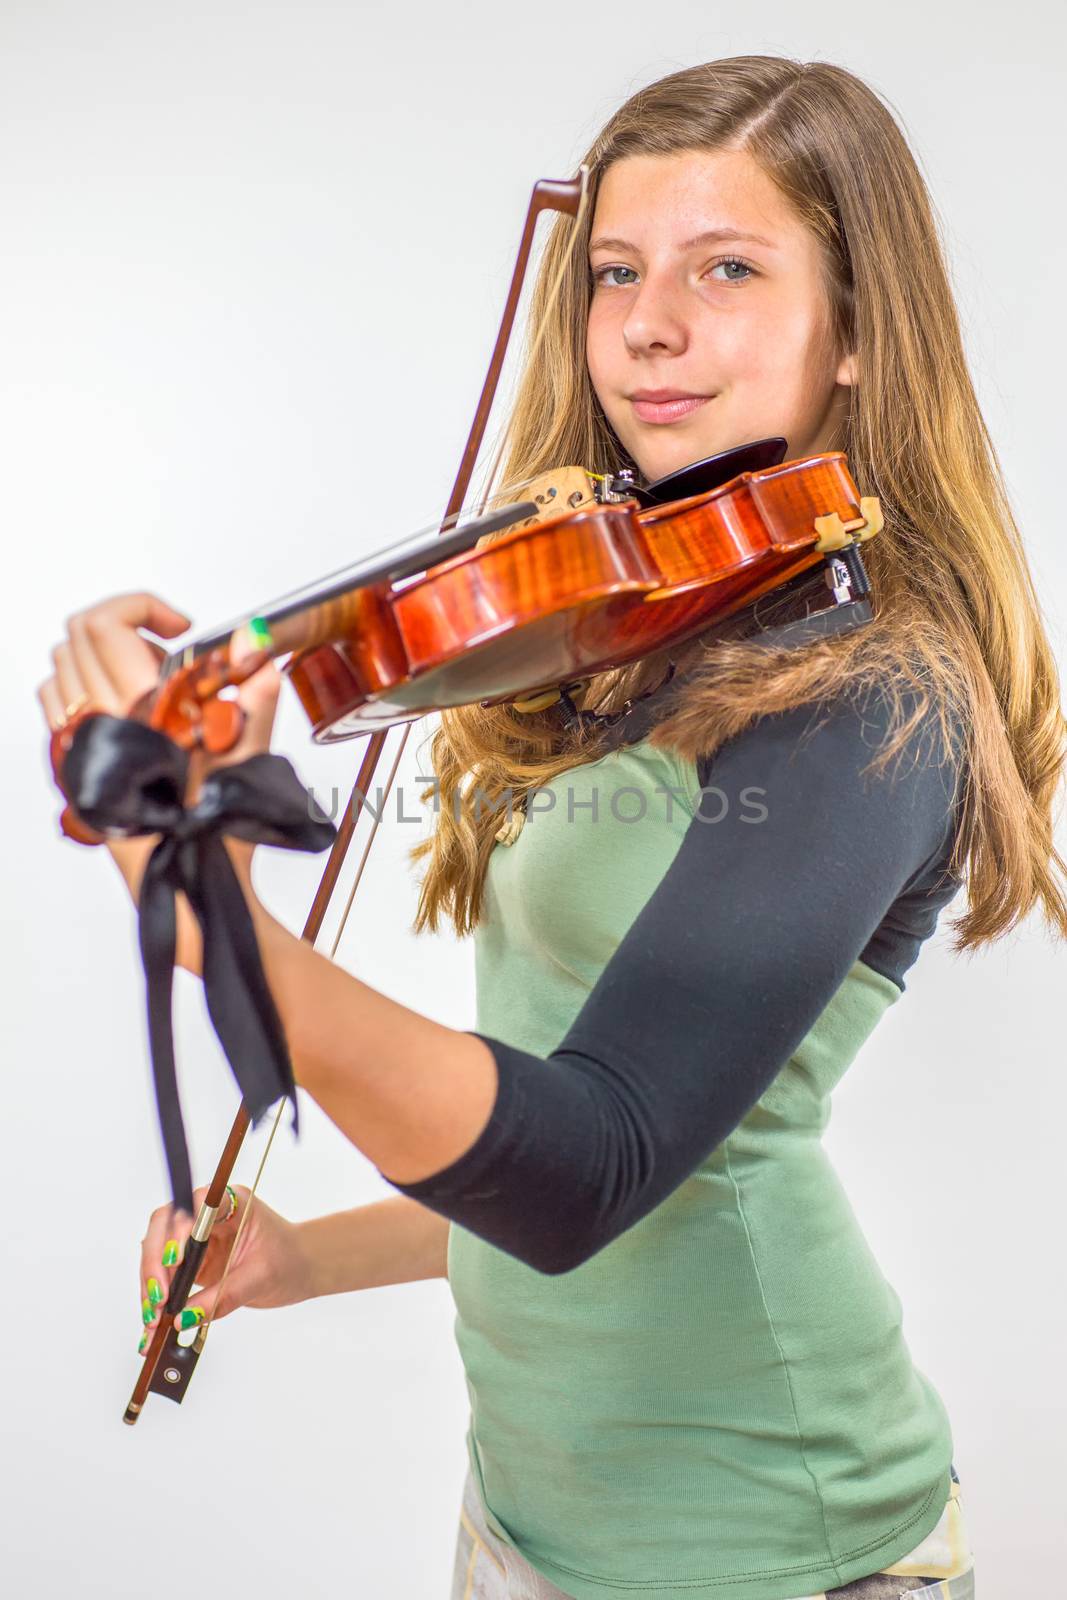 Dutch teenage girl playing violin by BenSchonewille